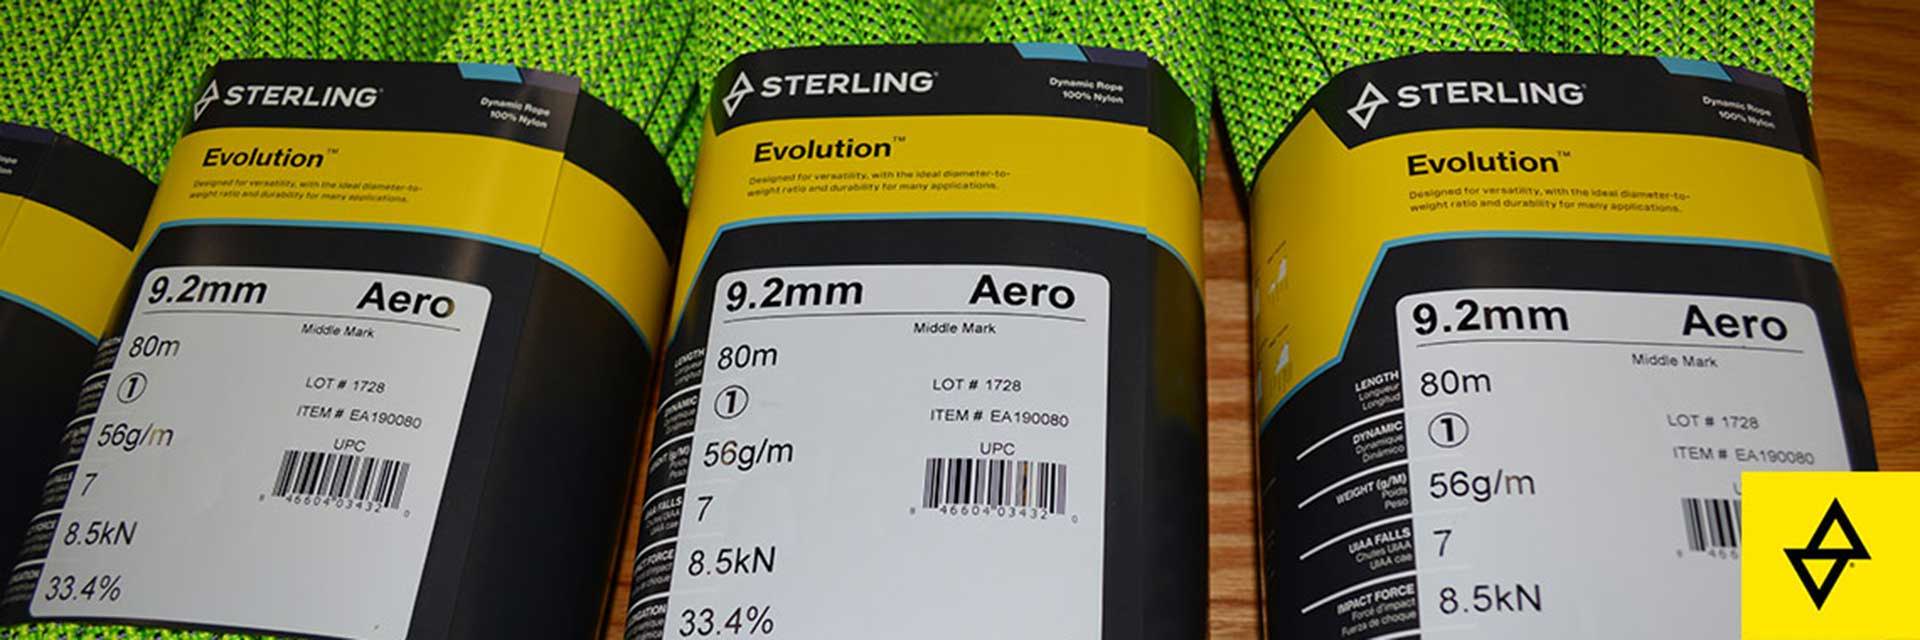 image of Sterling Rope Evolution Rope packaging